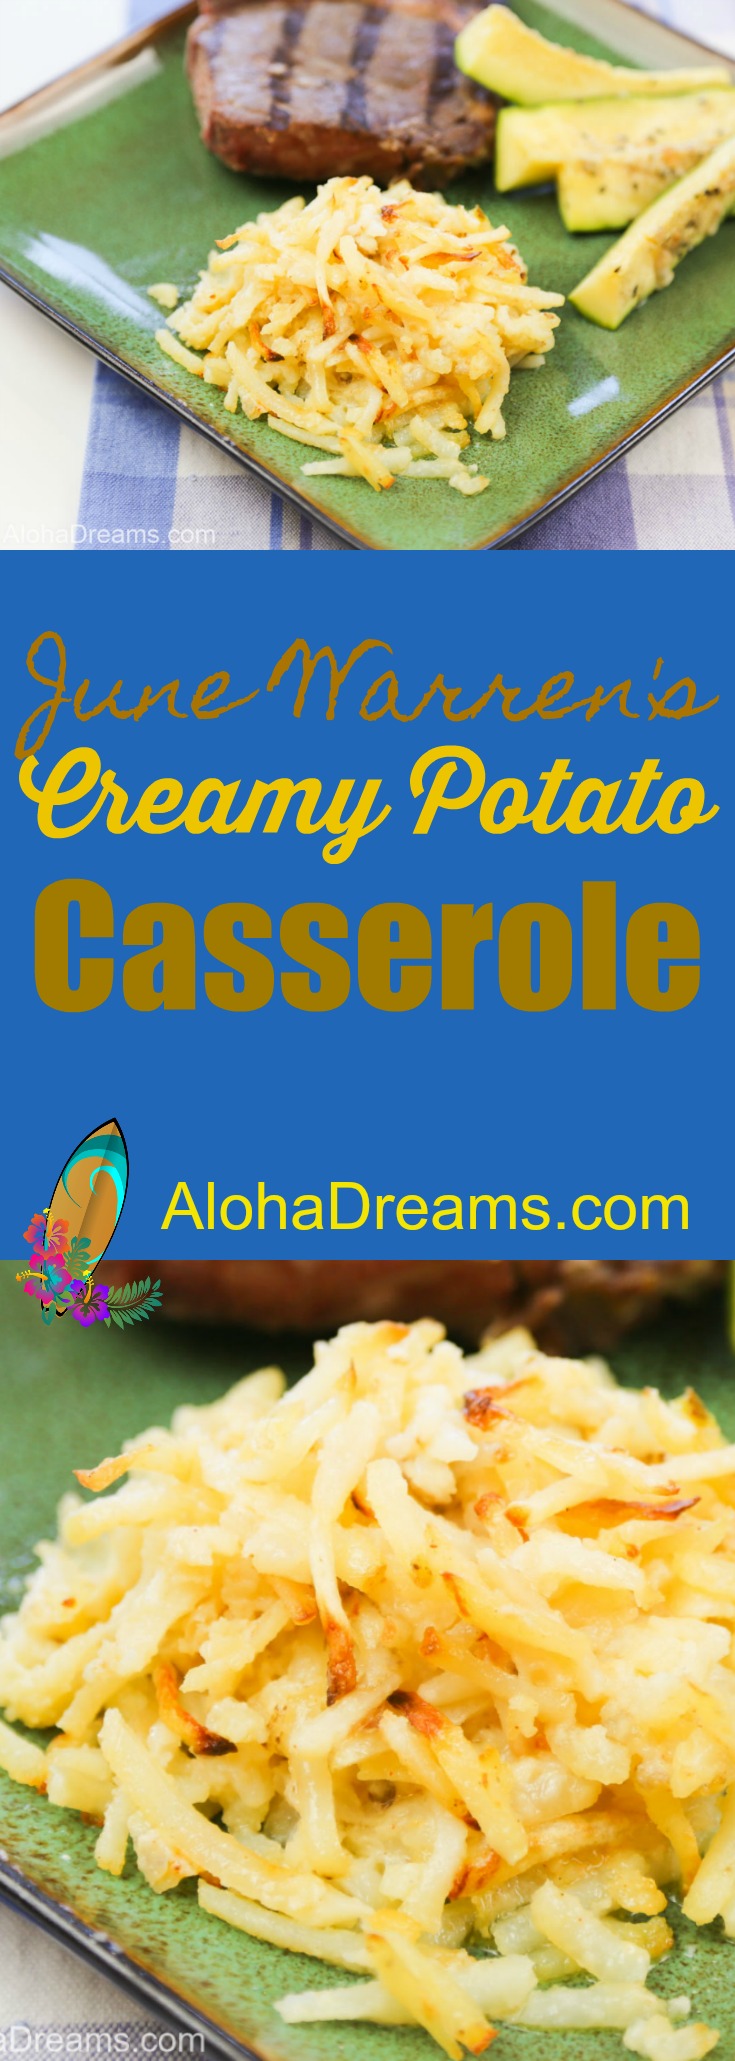 Creamy Potato Casserole